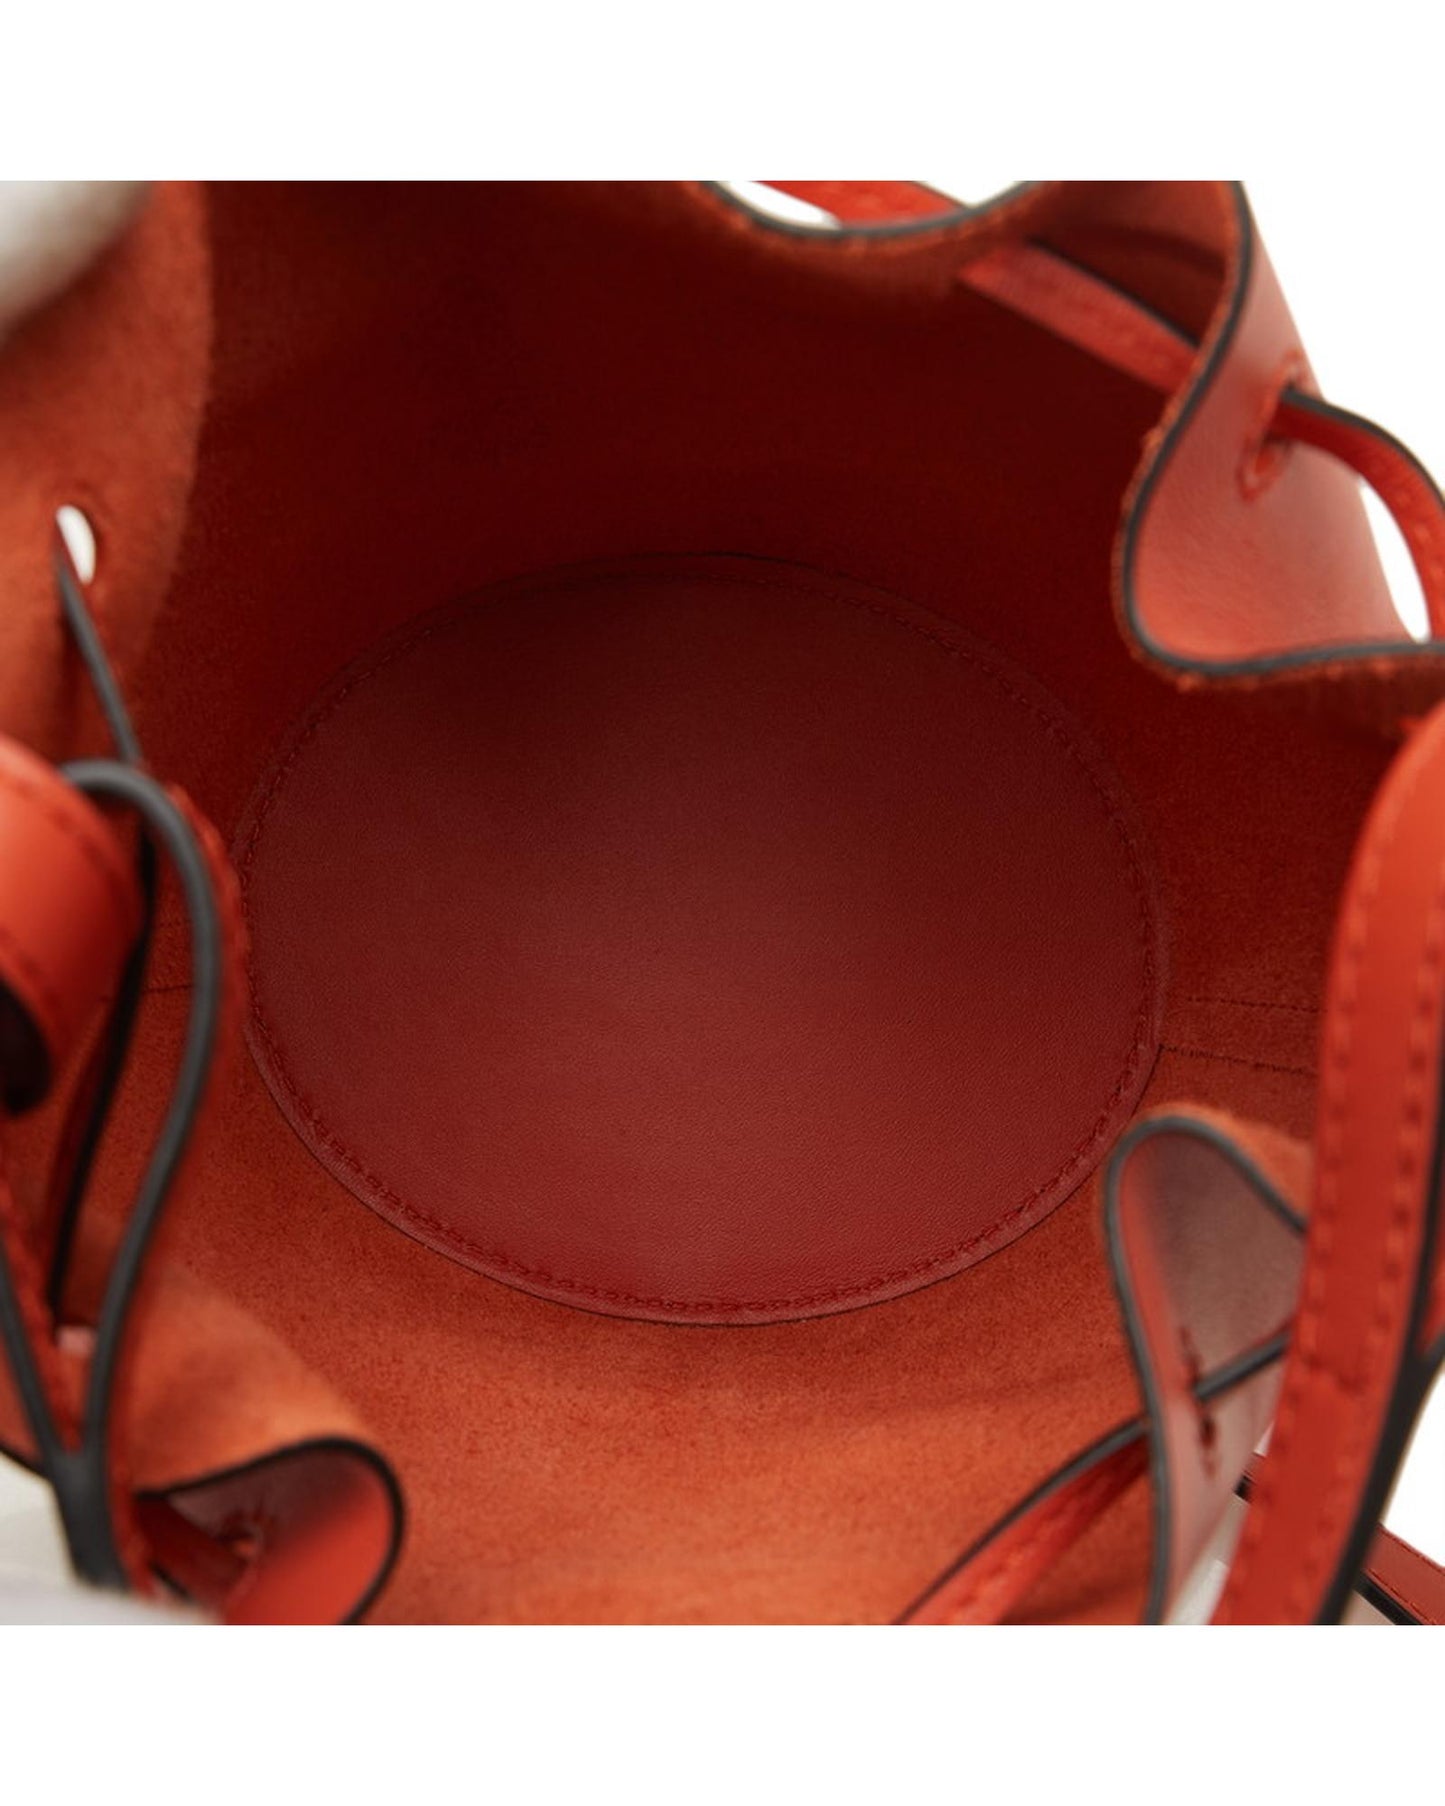 Loewe Women's Orange Leather Bucket Bag - A Condition in Orange